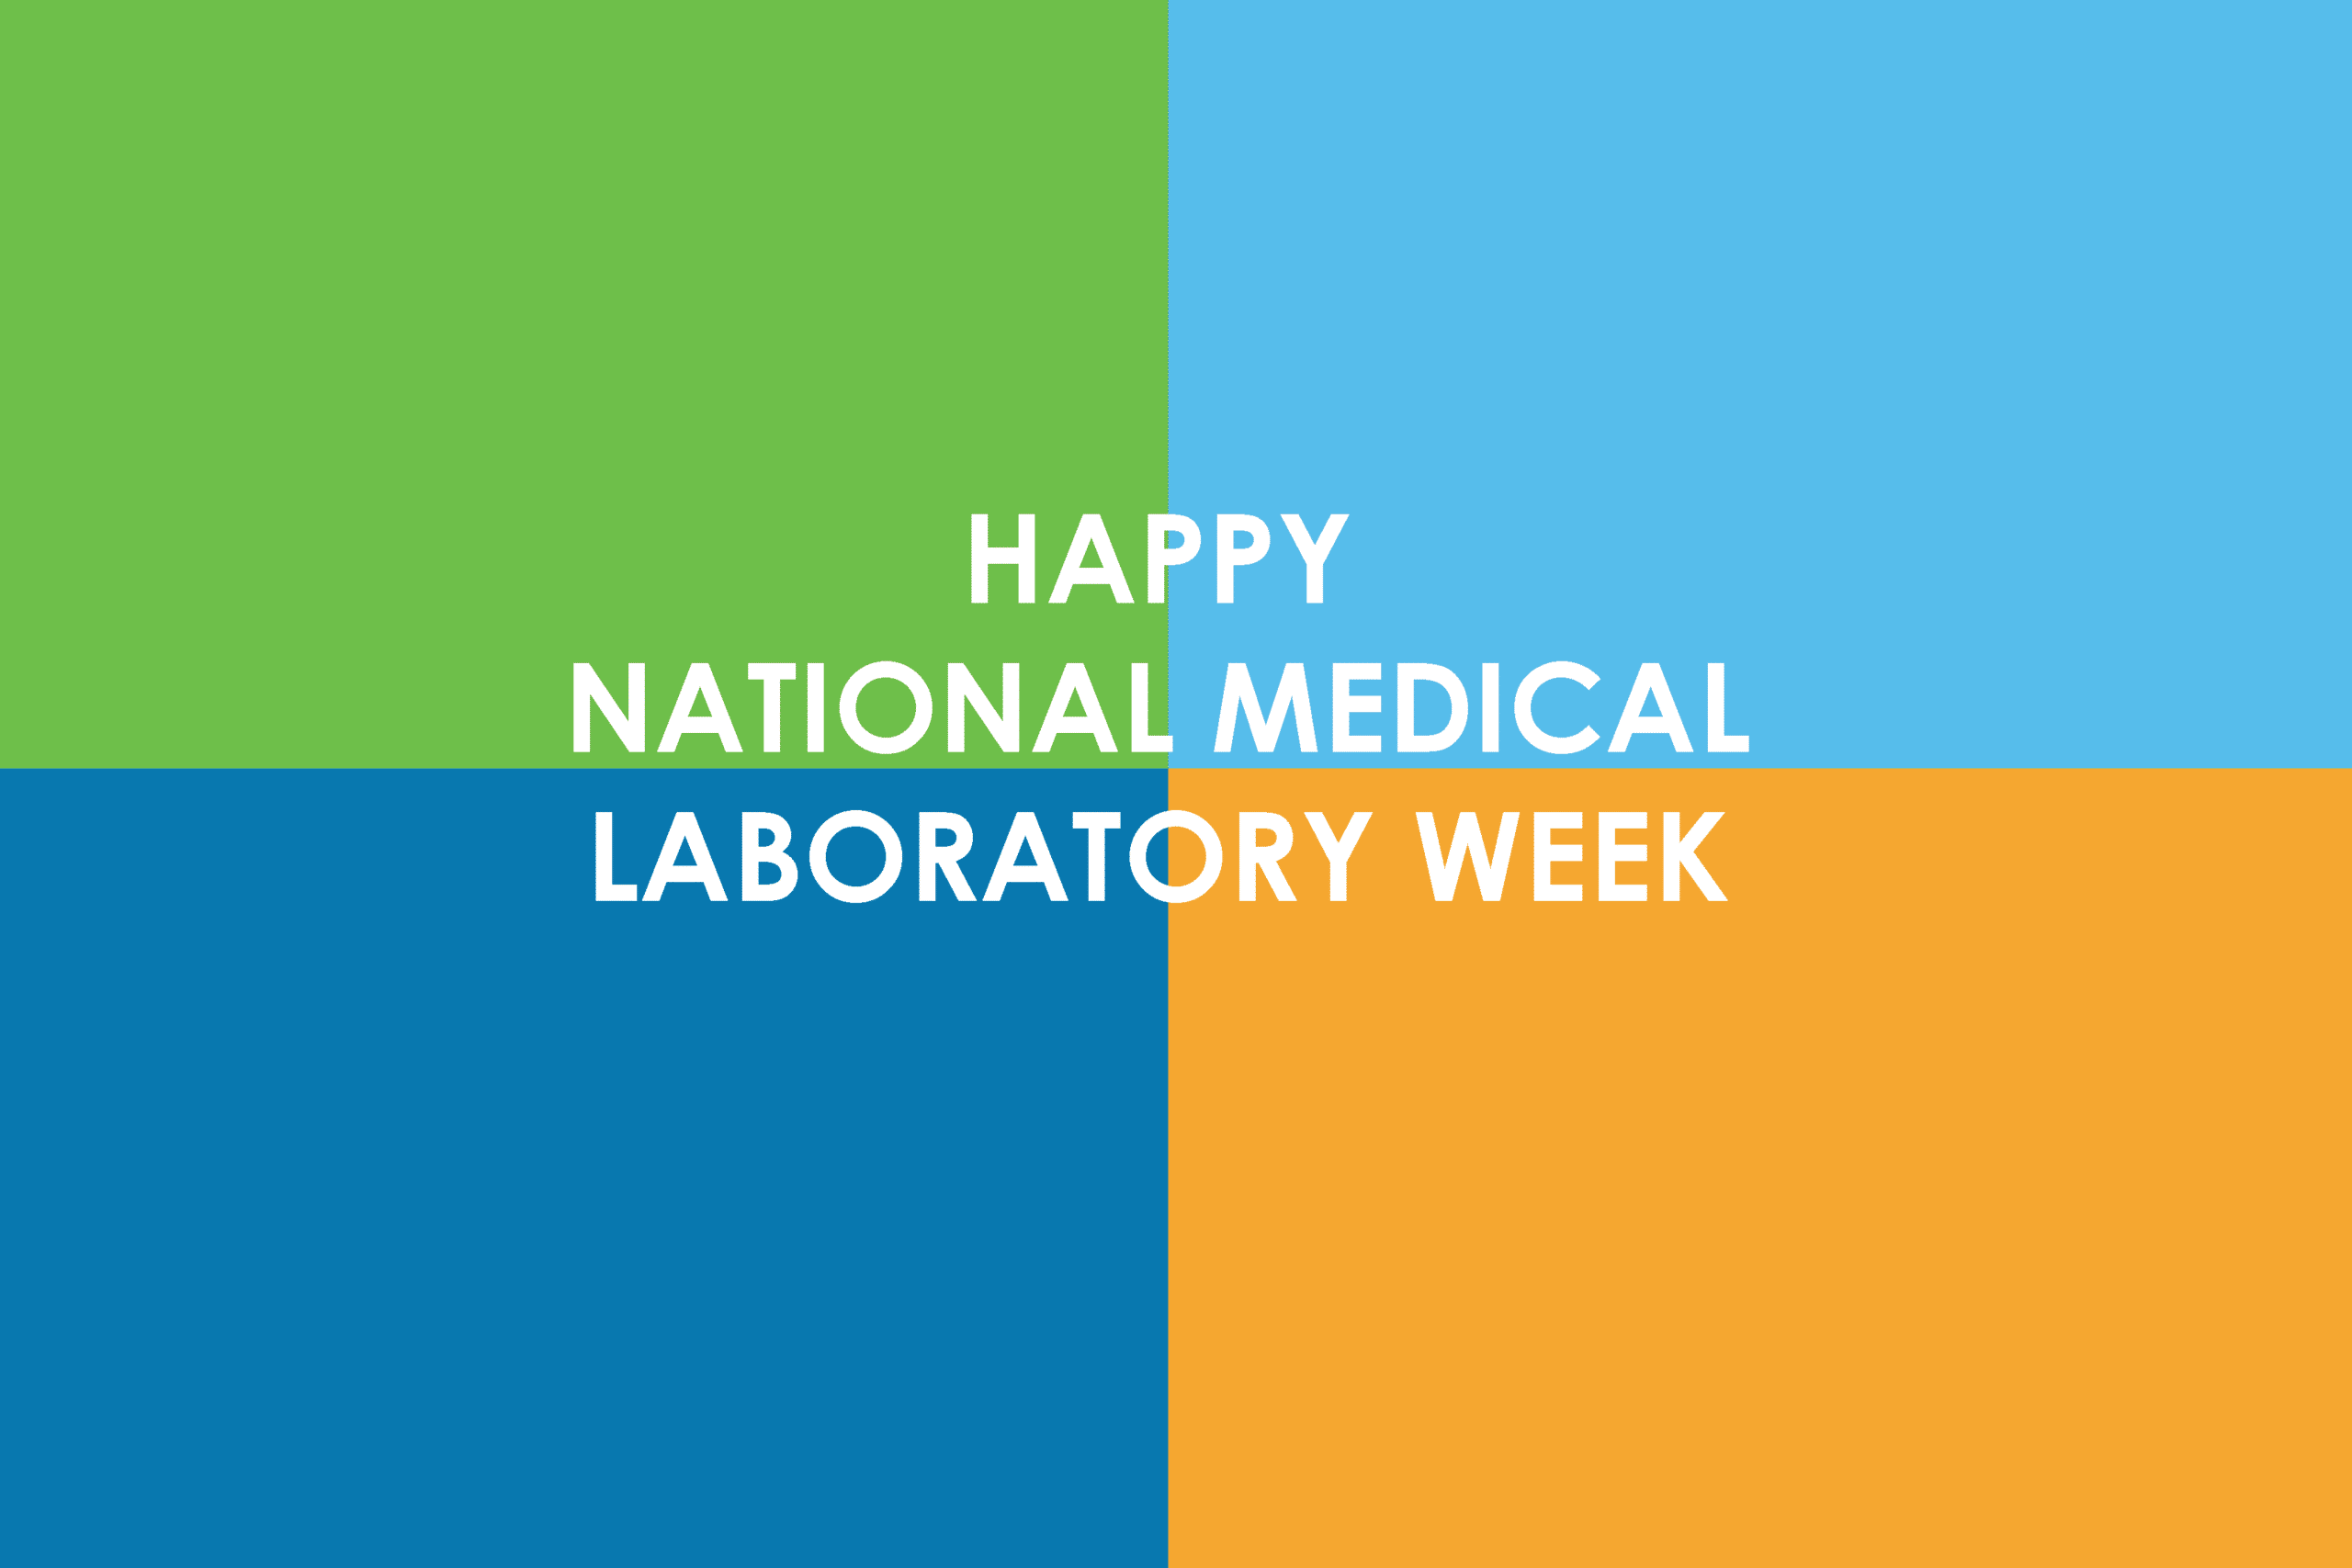 Happy National Medical Laboratory week